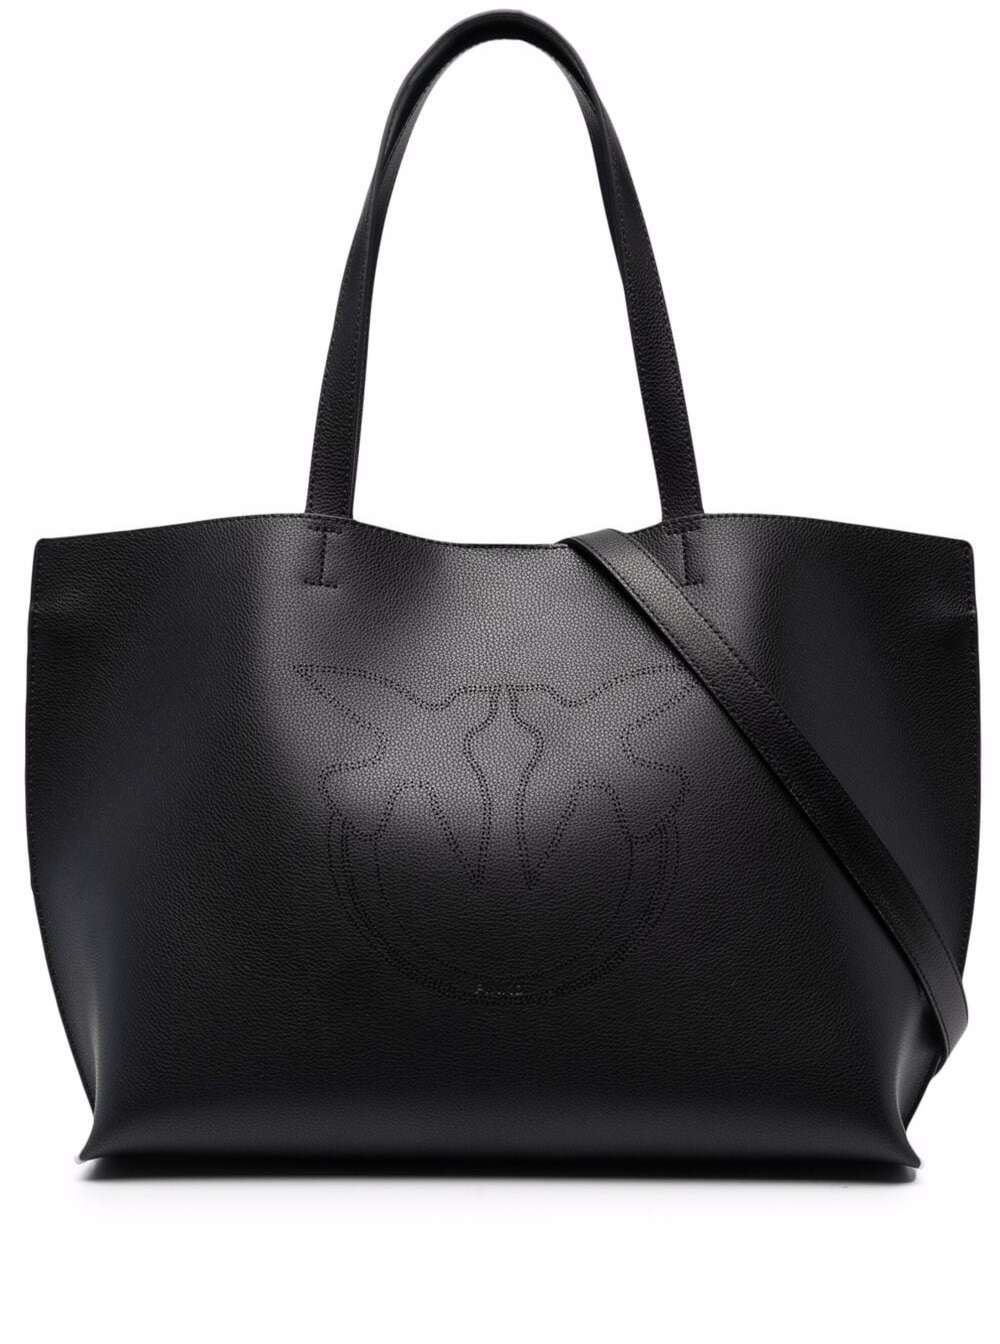 Pinko Shopping Black Leather Handbag With Logo